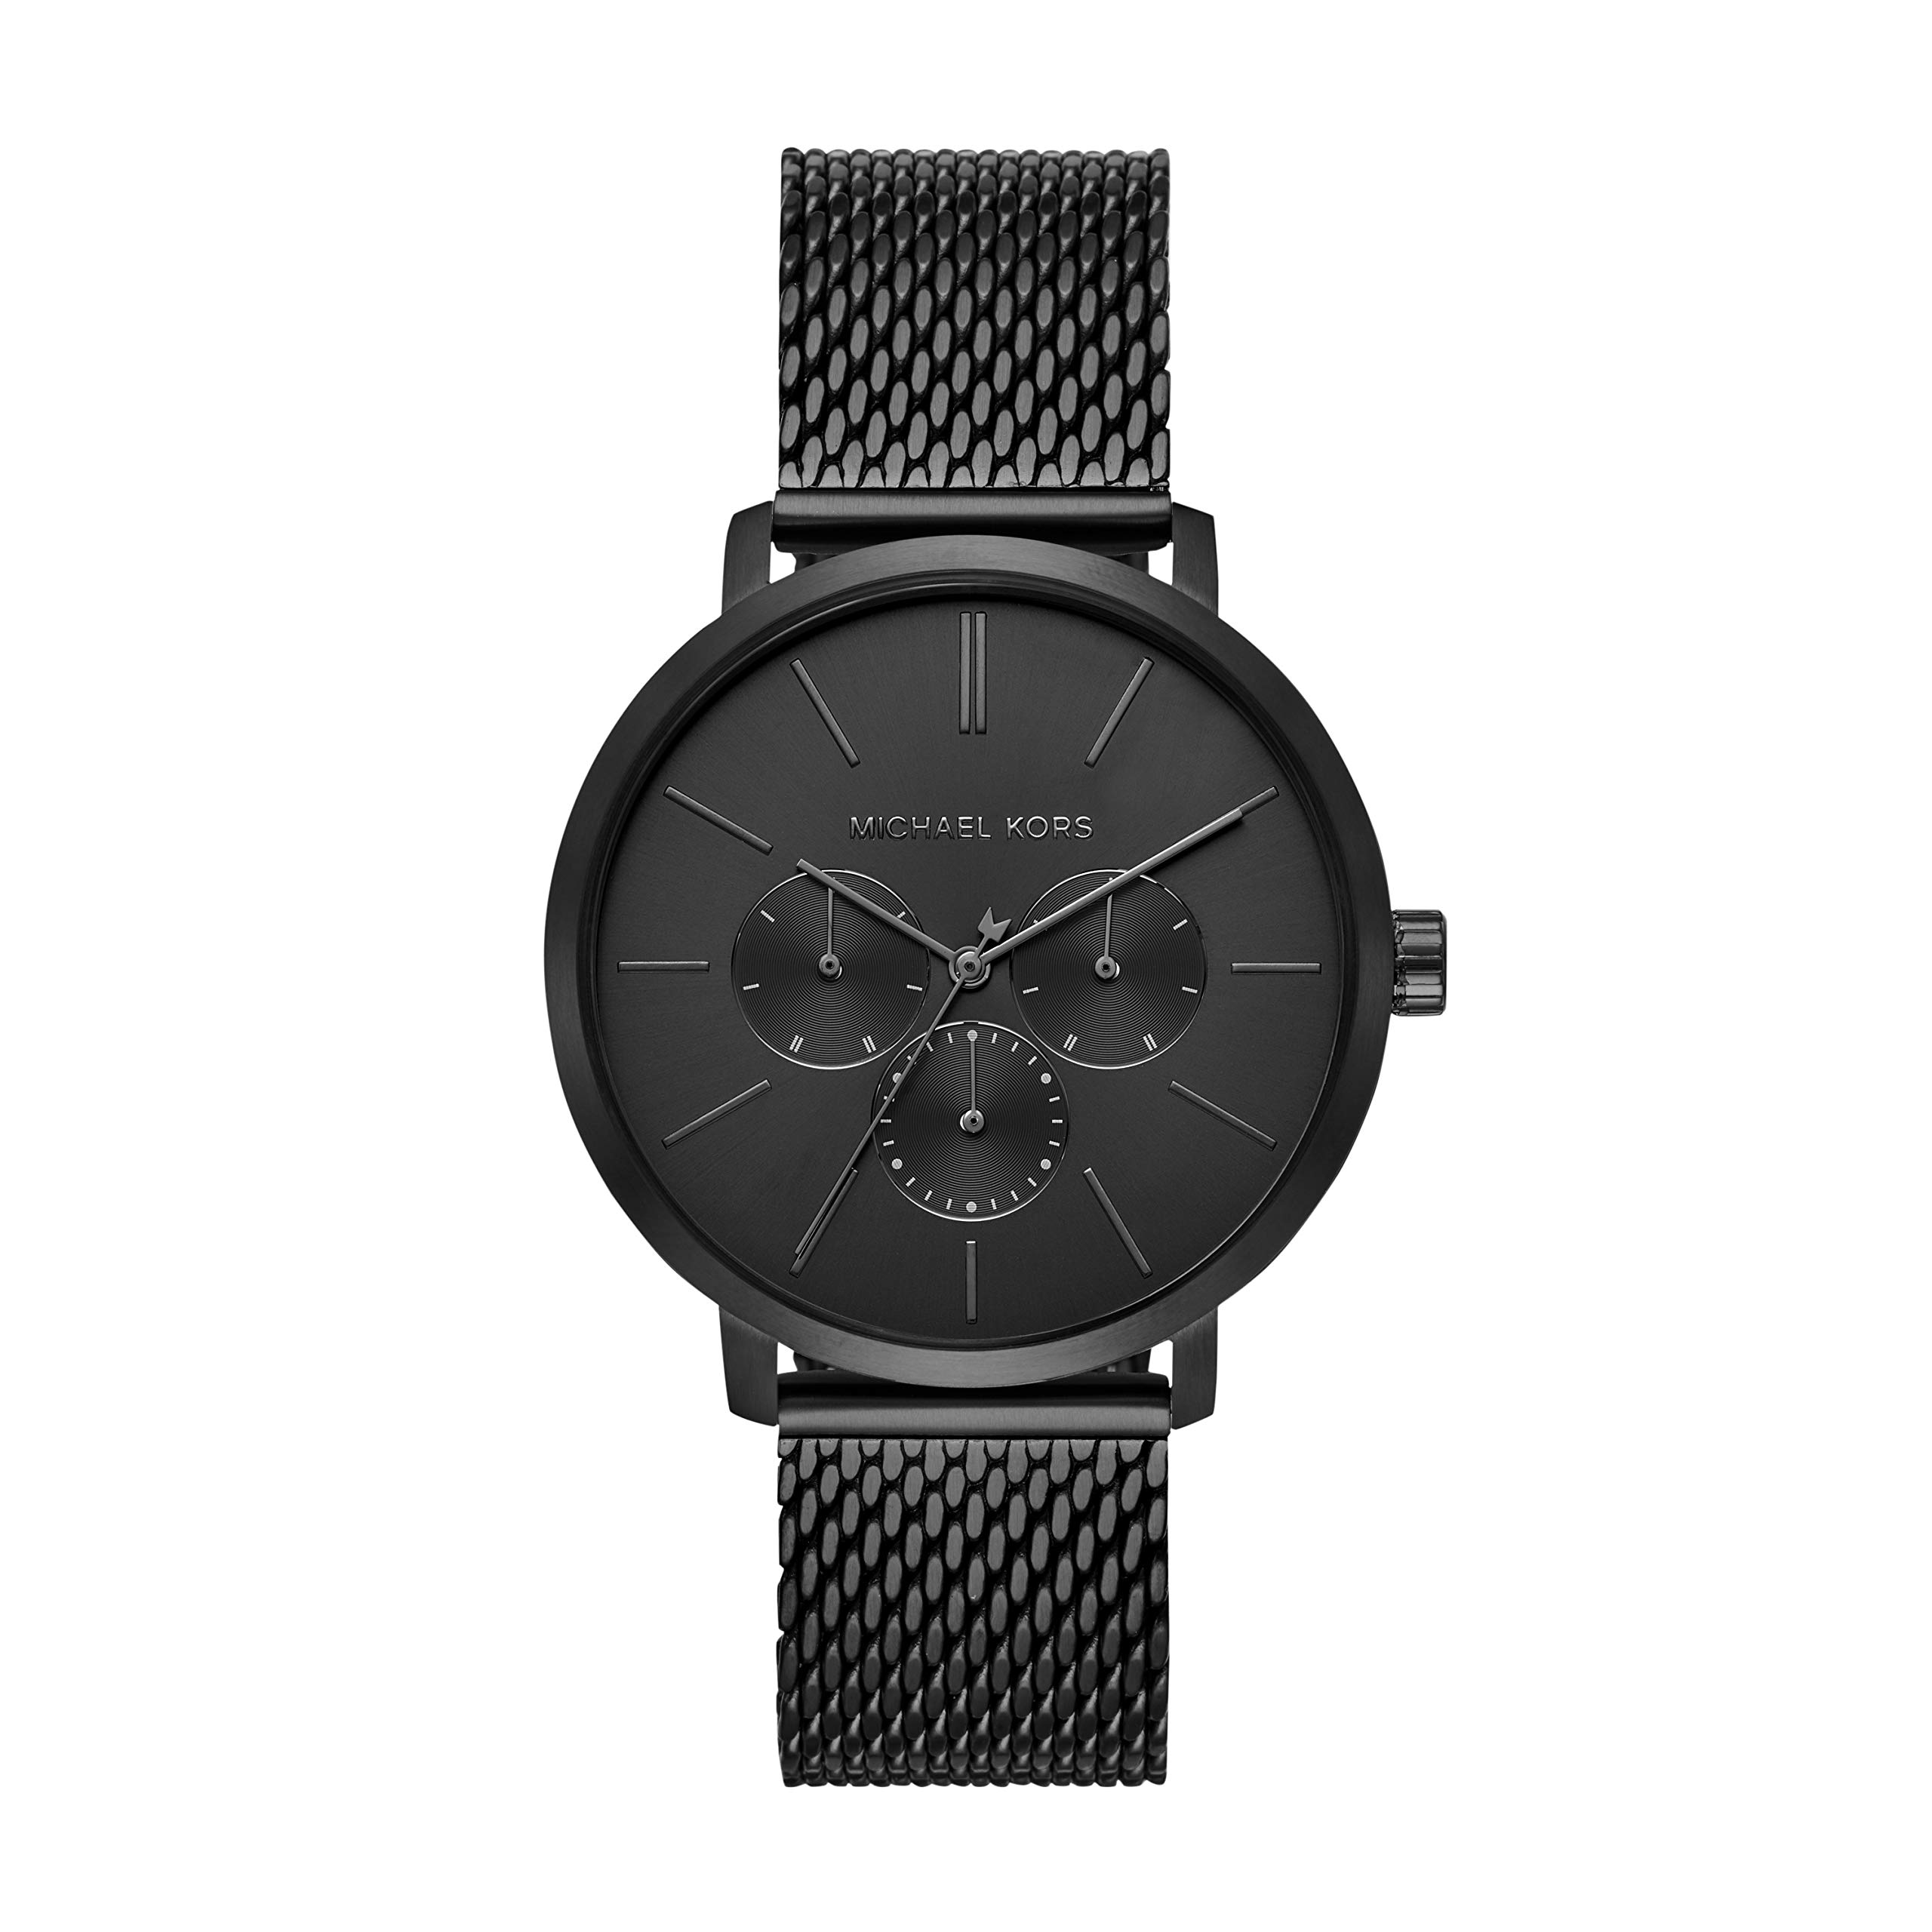 Mua Michael Kors Men's Blake Quartz Watch with Stainless Steel Strap,  Black, 20 (Model: MK8778) trên Amazon Mỹ chính hãng 2022 | Giaonhan247